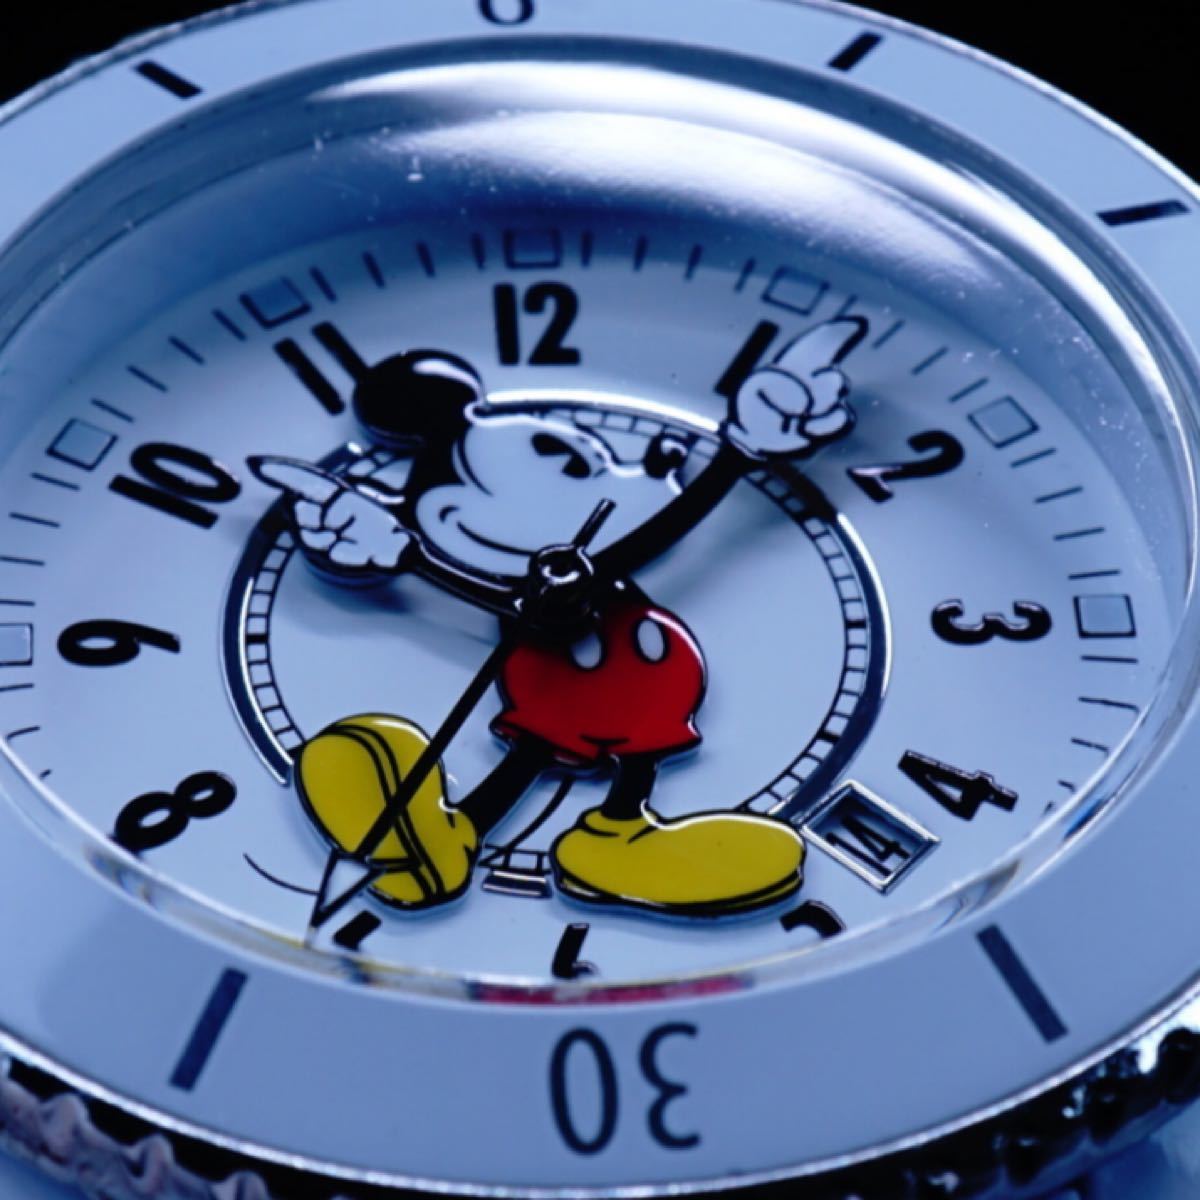 SEIKOムーブ/Disney限定/MICKEYミッキーマウス別注コラボ時計/J12ミッキーWHceramic5気圧絶版新品逆輸入